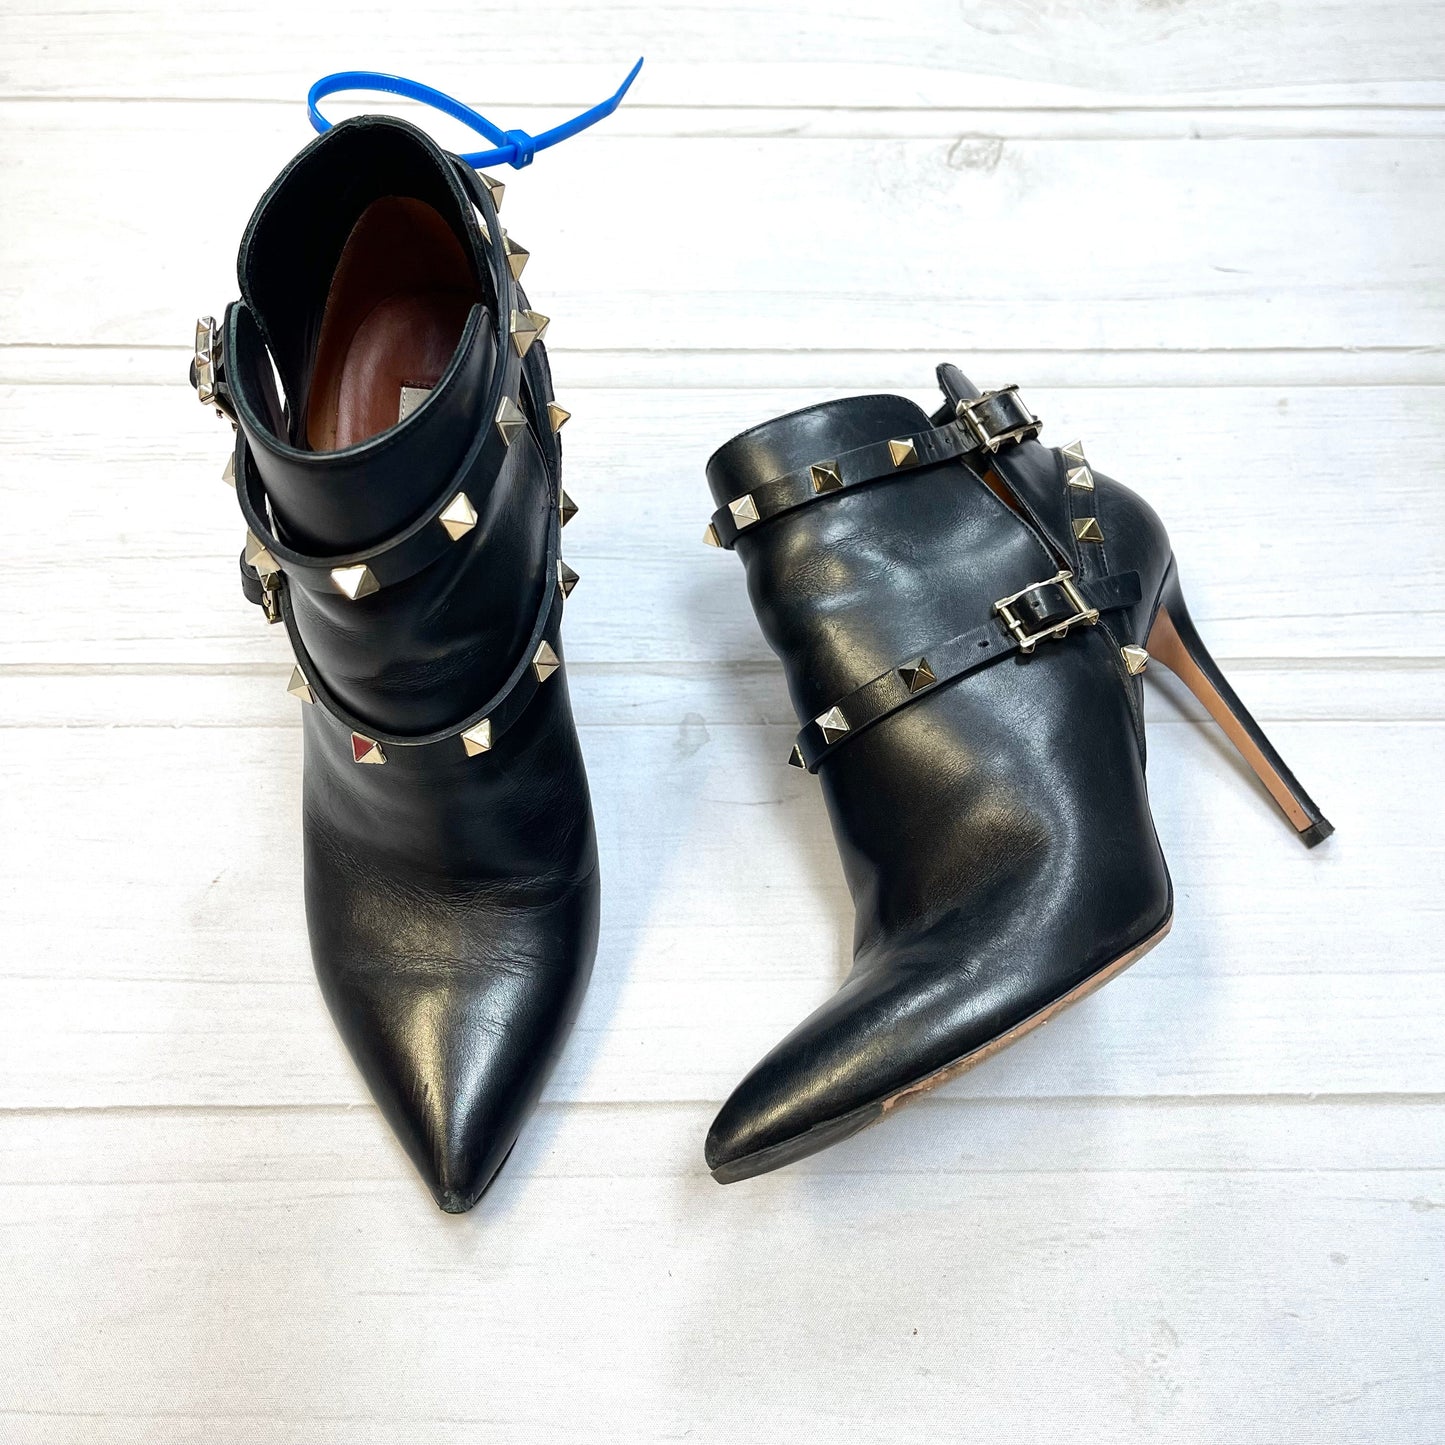 Boots Luxury Designer By Valentino  Size: 9.5